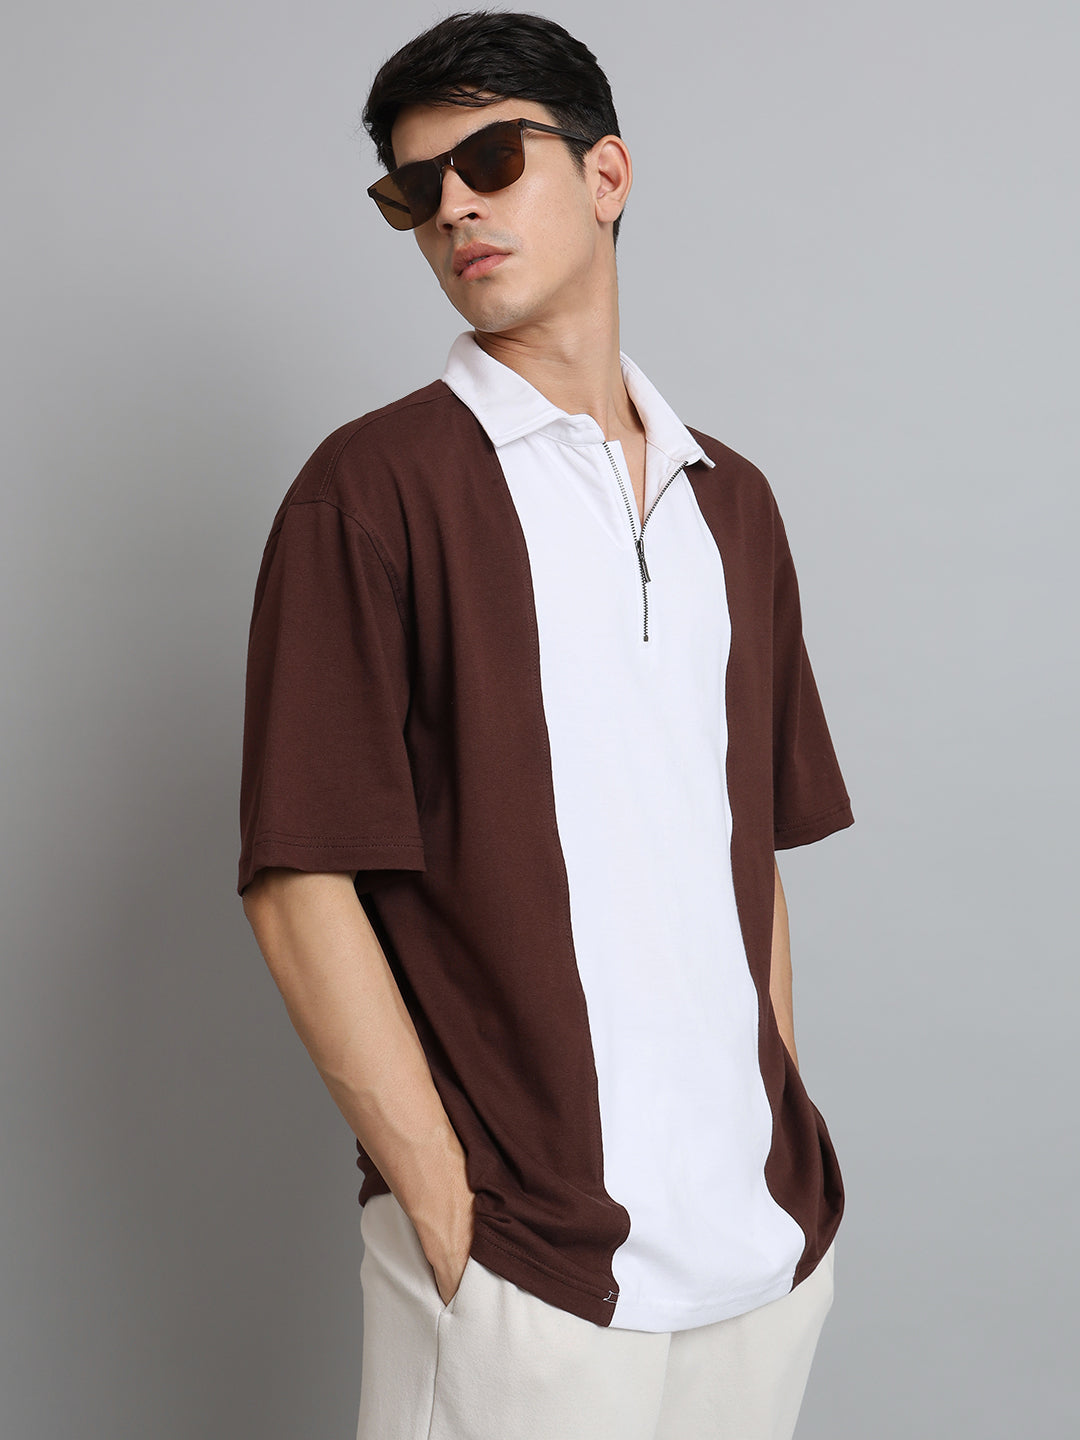 Brown & White Oversized Polo Zipper T-Shirt - Wearduds